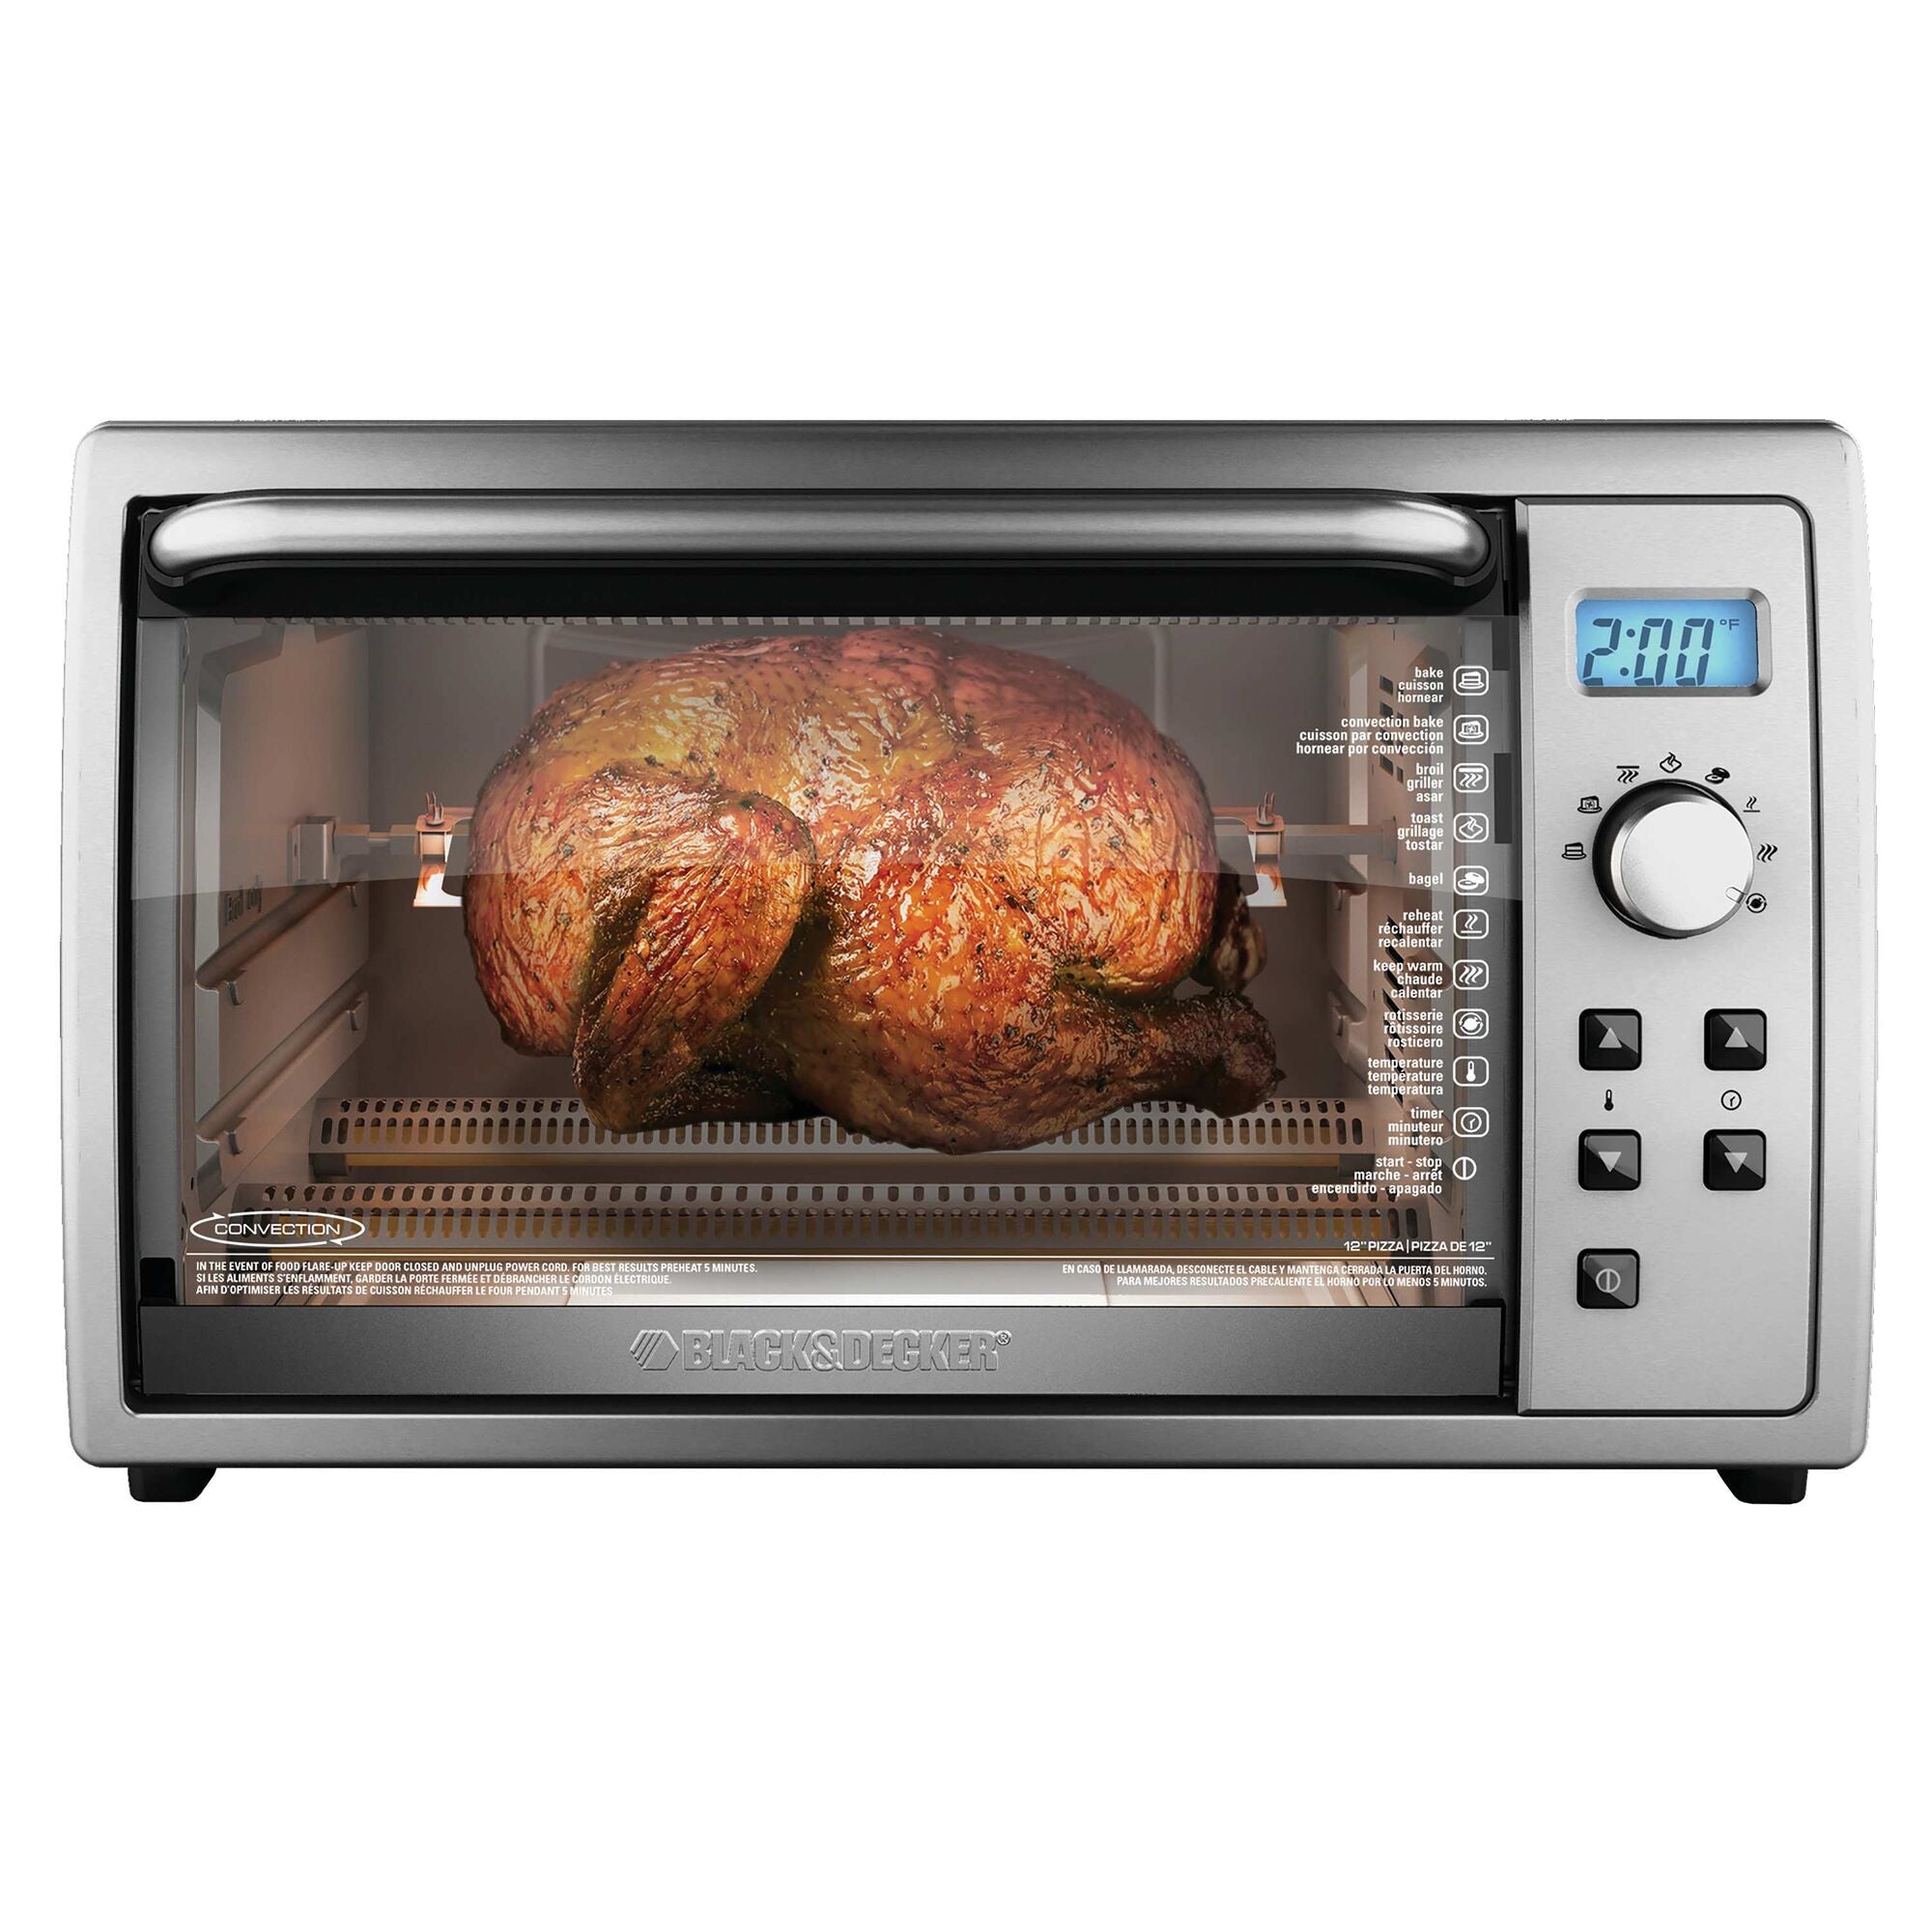  Black+Decker WCR-076 Rotisserie Toaster Oven, 9X13